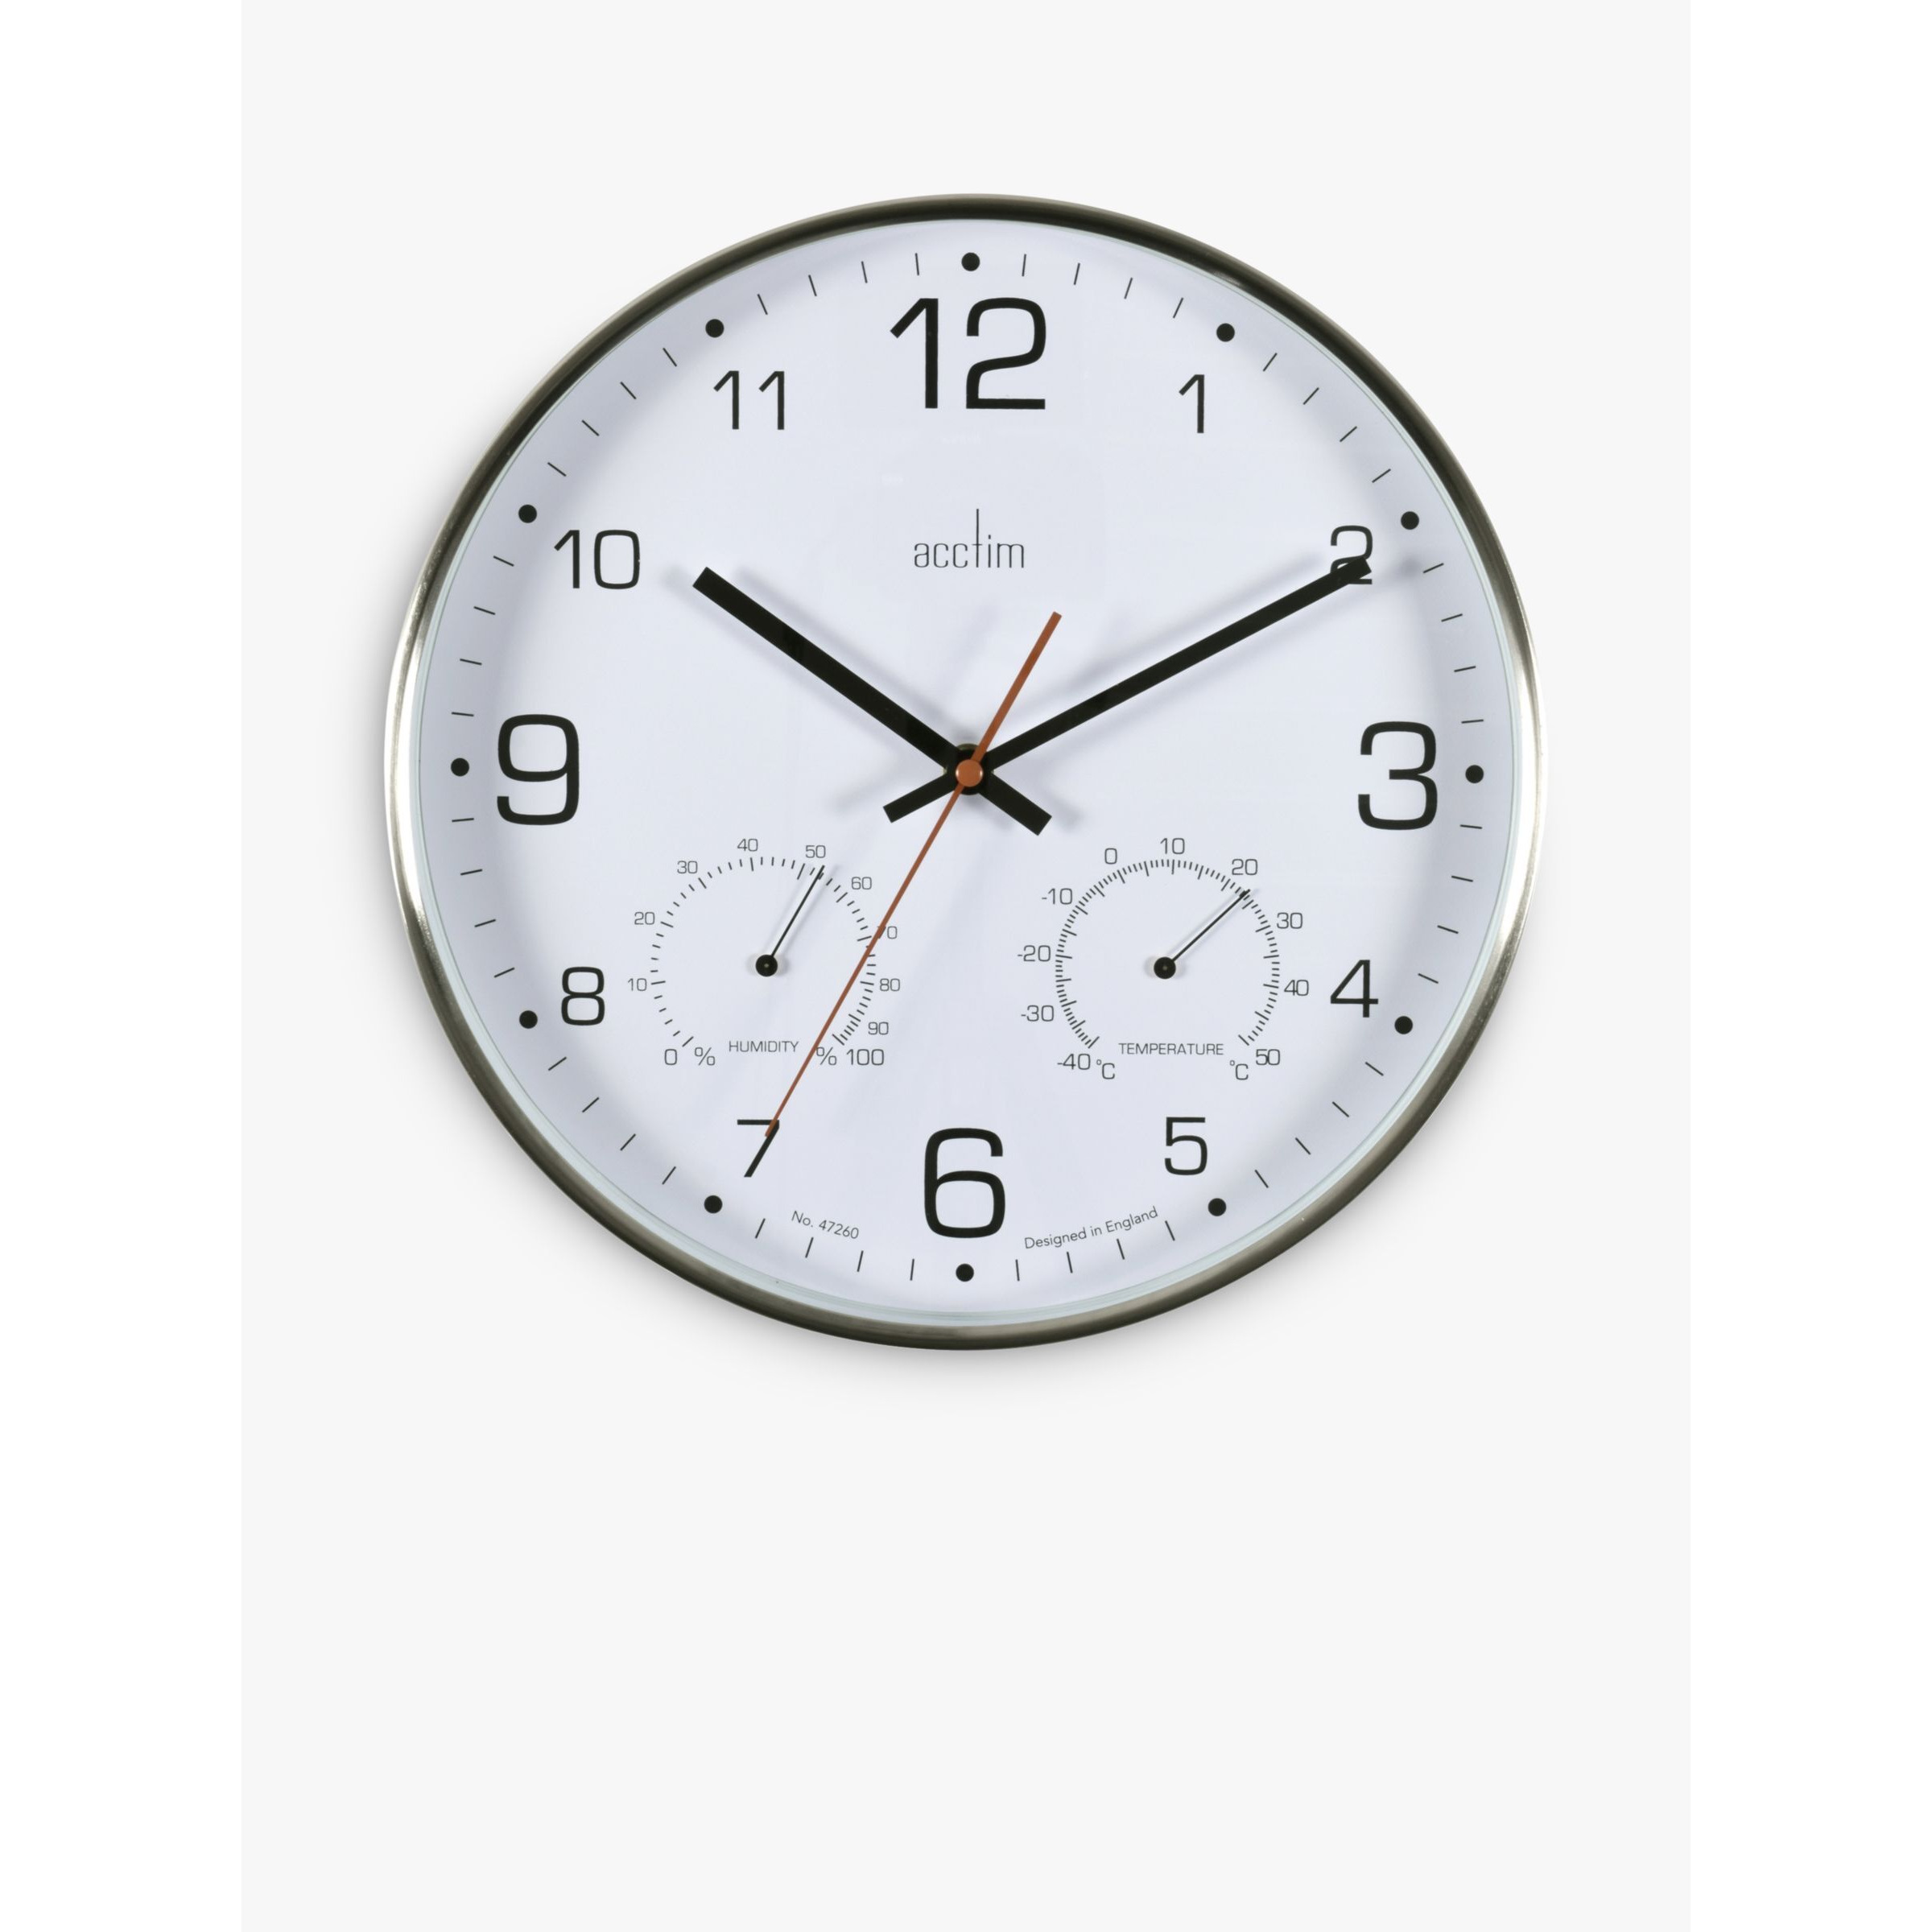 Acctim Komfort Analogue Non-Ticking Sweep Quartz Wall Clock, 30.5cm, Silver - image 1